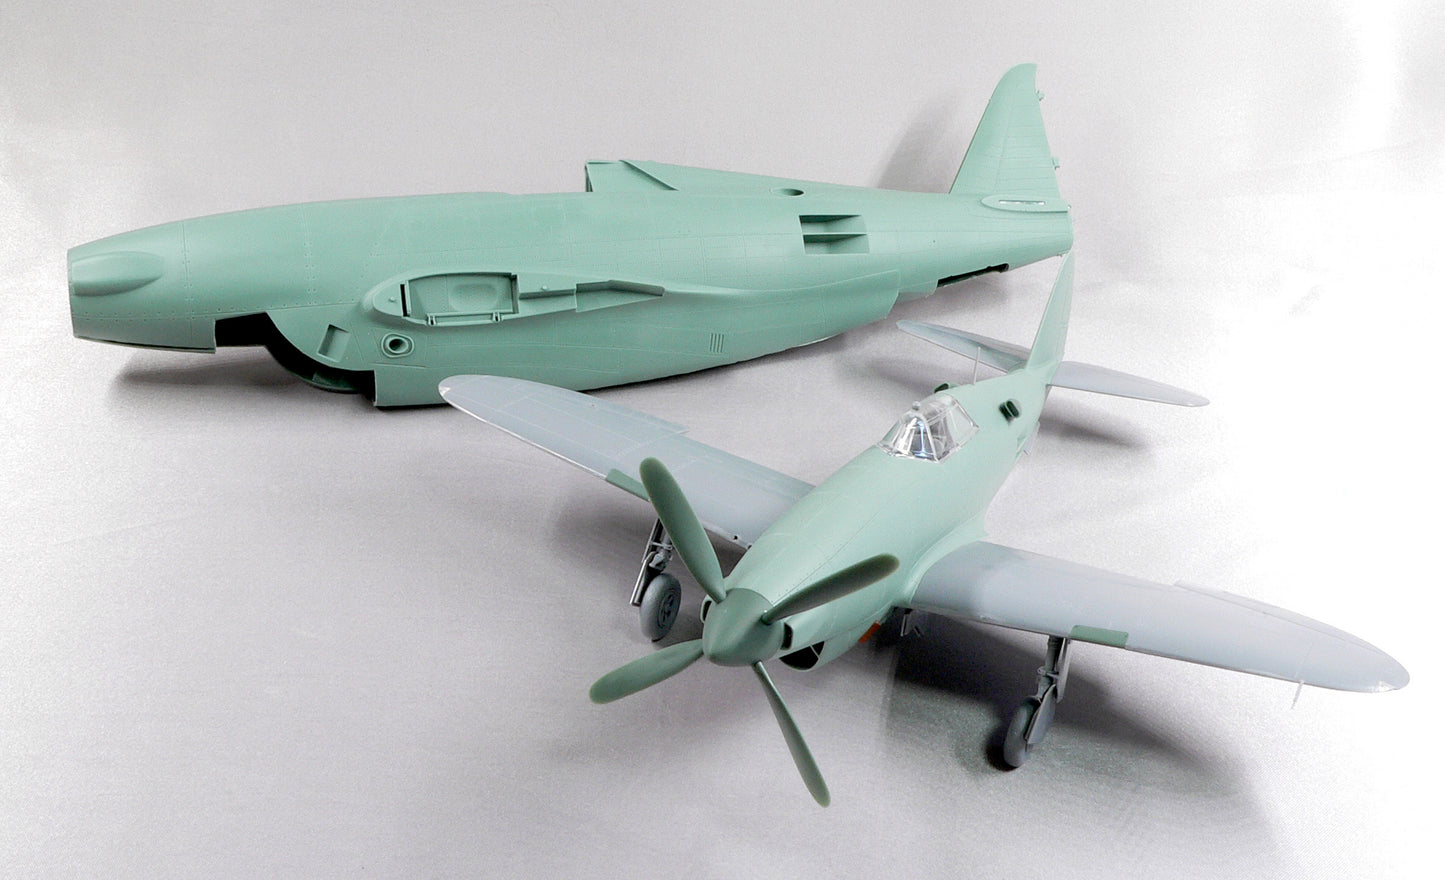 Republic XP-47H conversion set for Trumpeter kit P-47D Thunderbolt «Razorback»1/32 scale